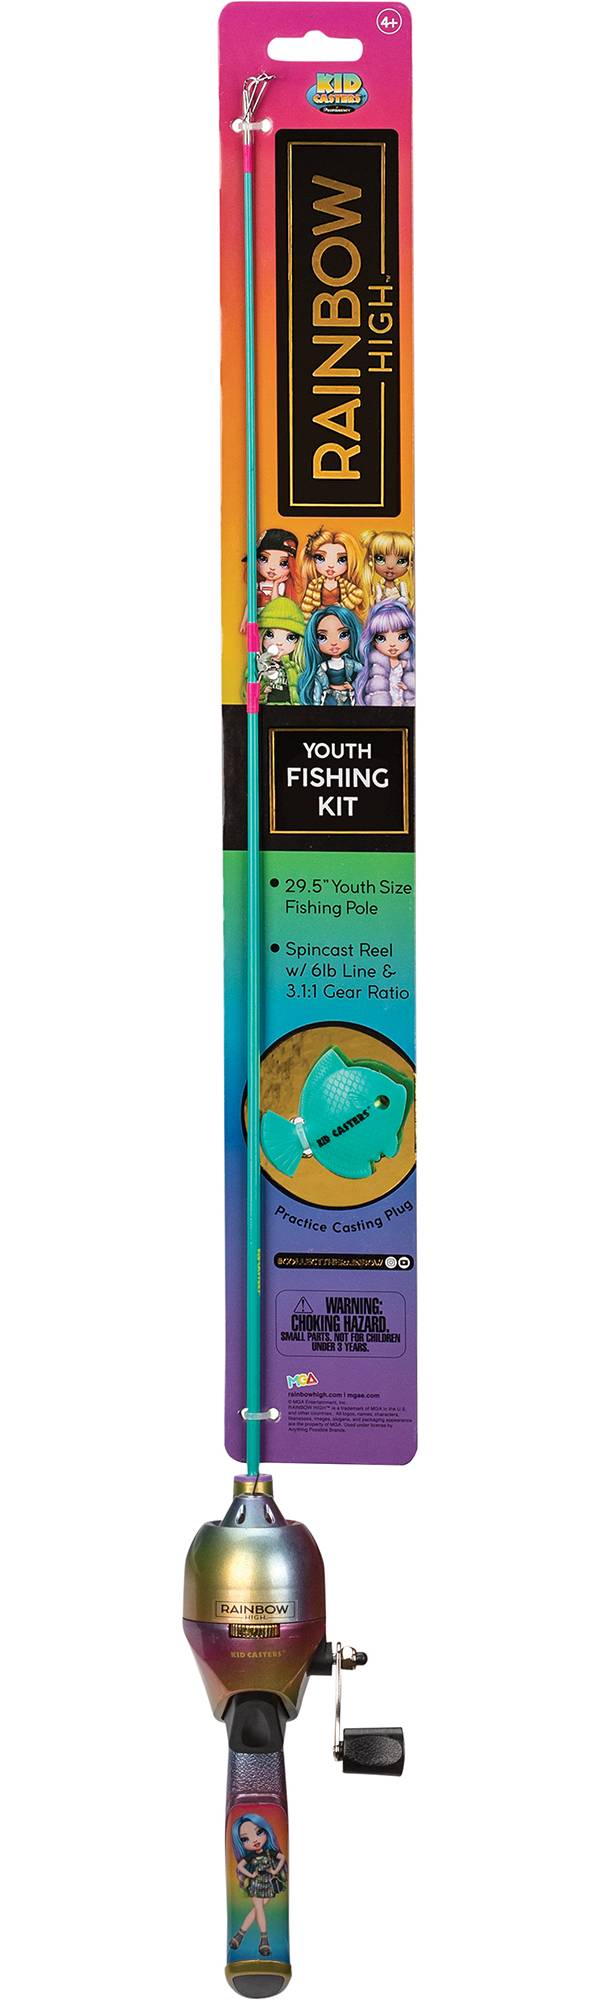 Kid Casters Rainbow High Fishing Kit product image